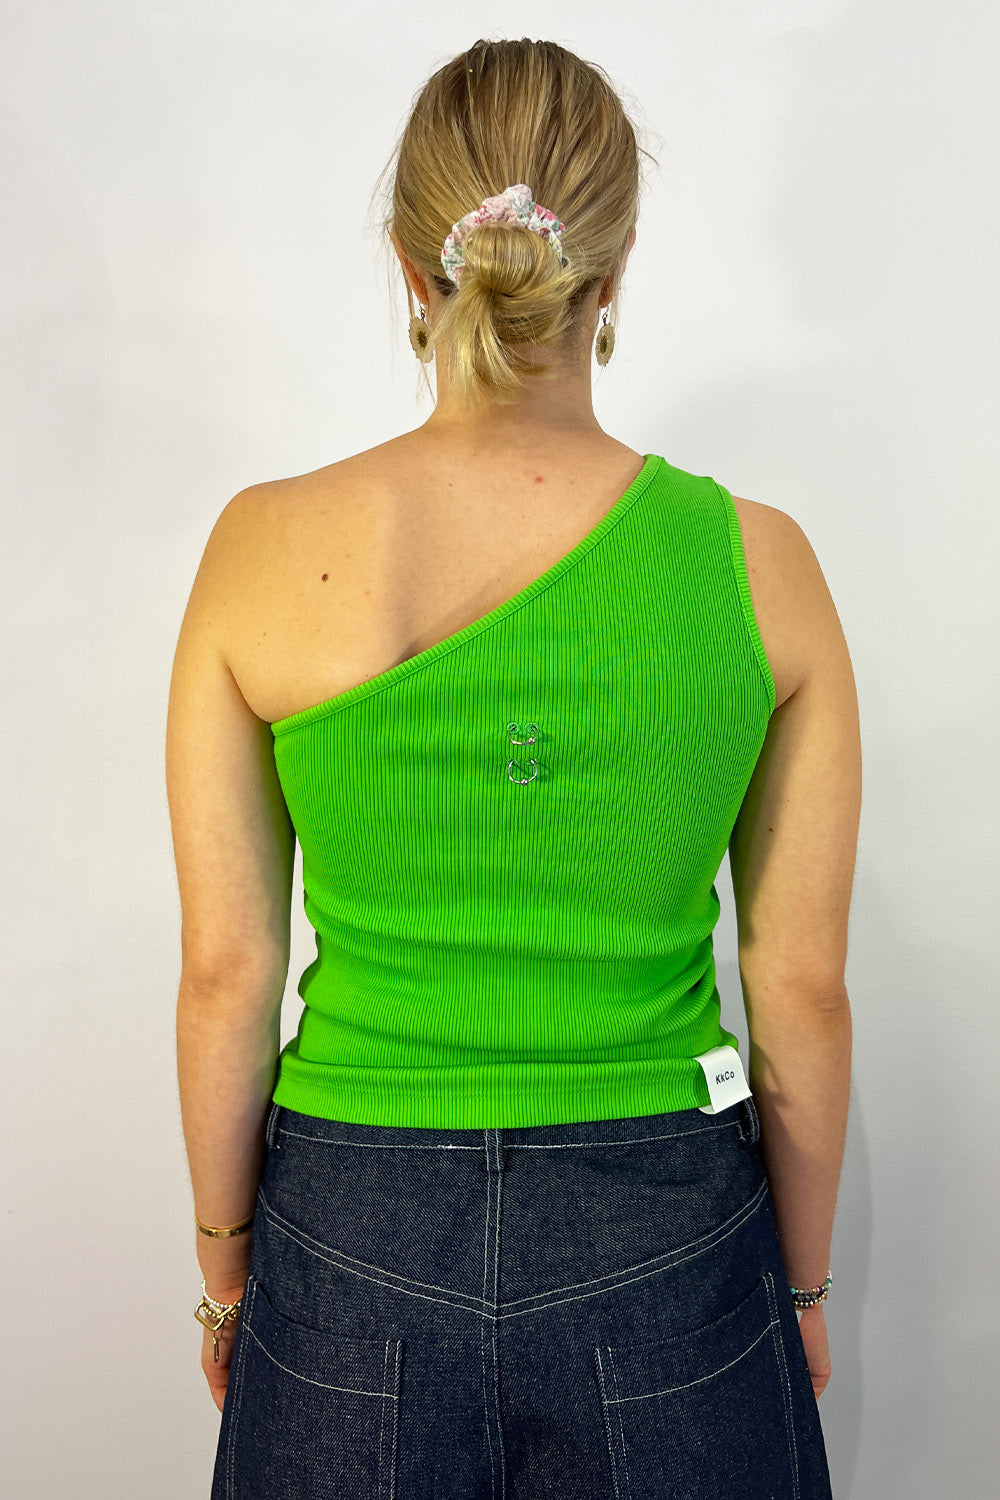 KkCo - Pierced One Shoulder Rib Tank: Lime